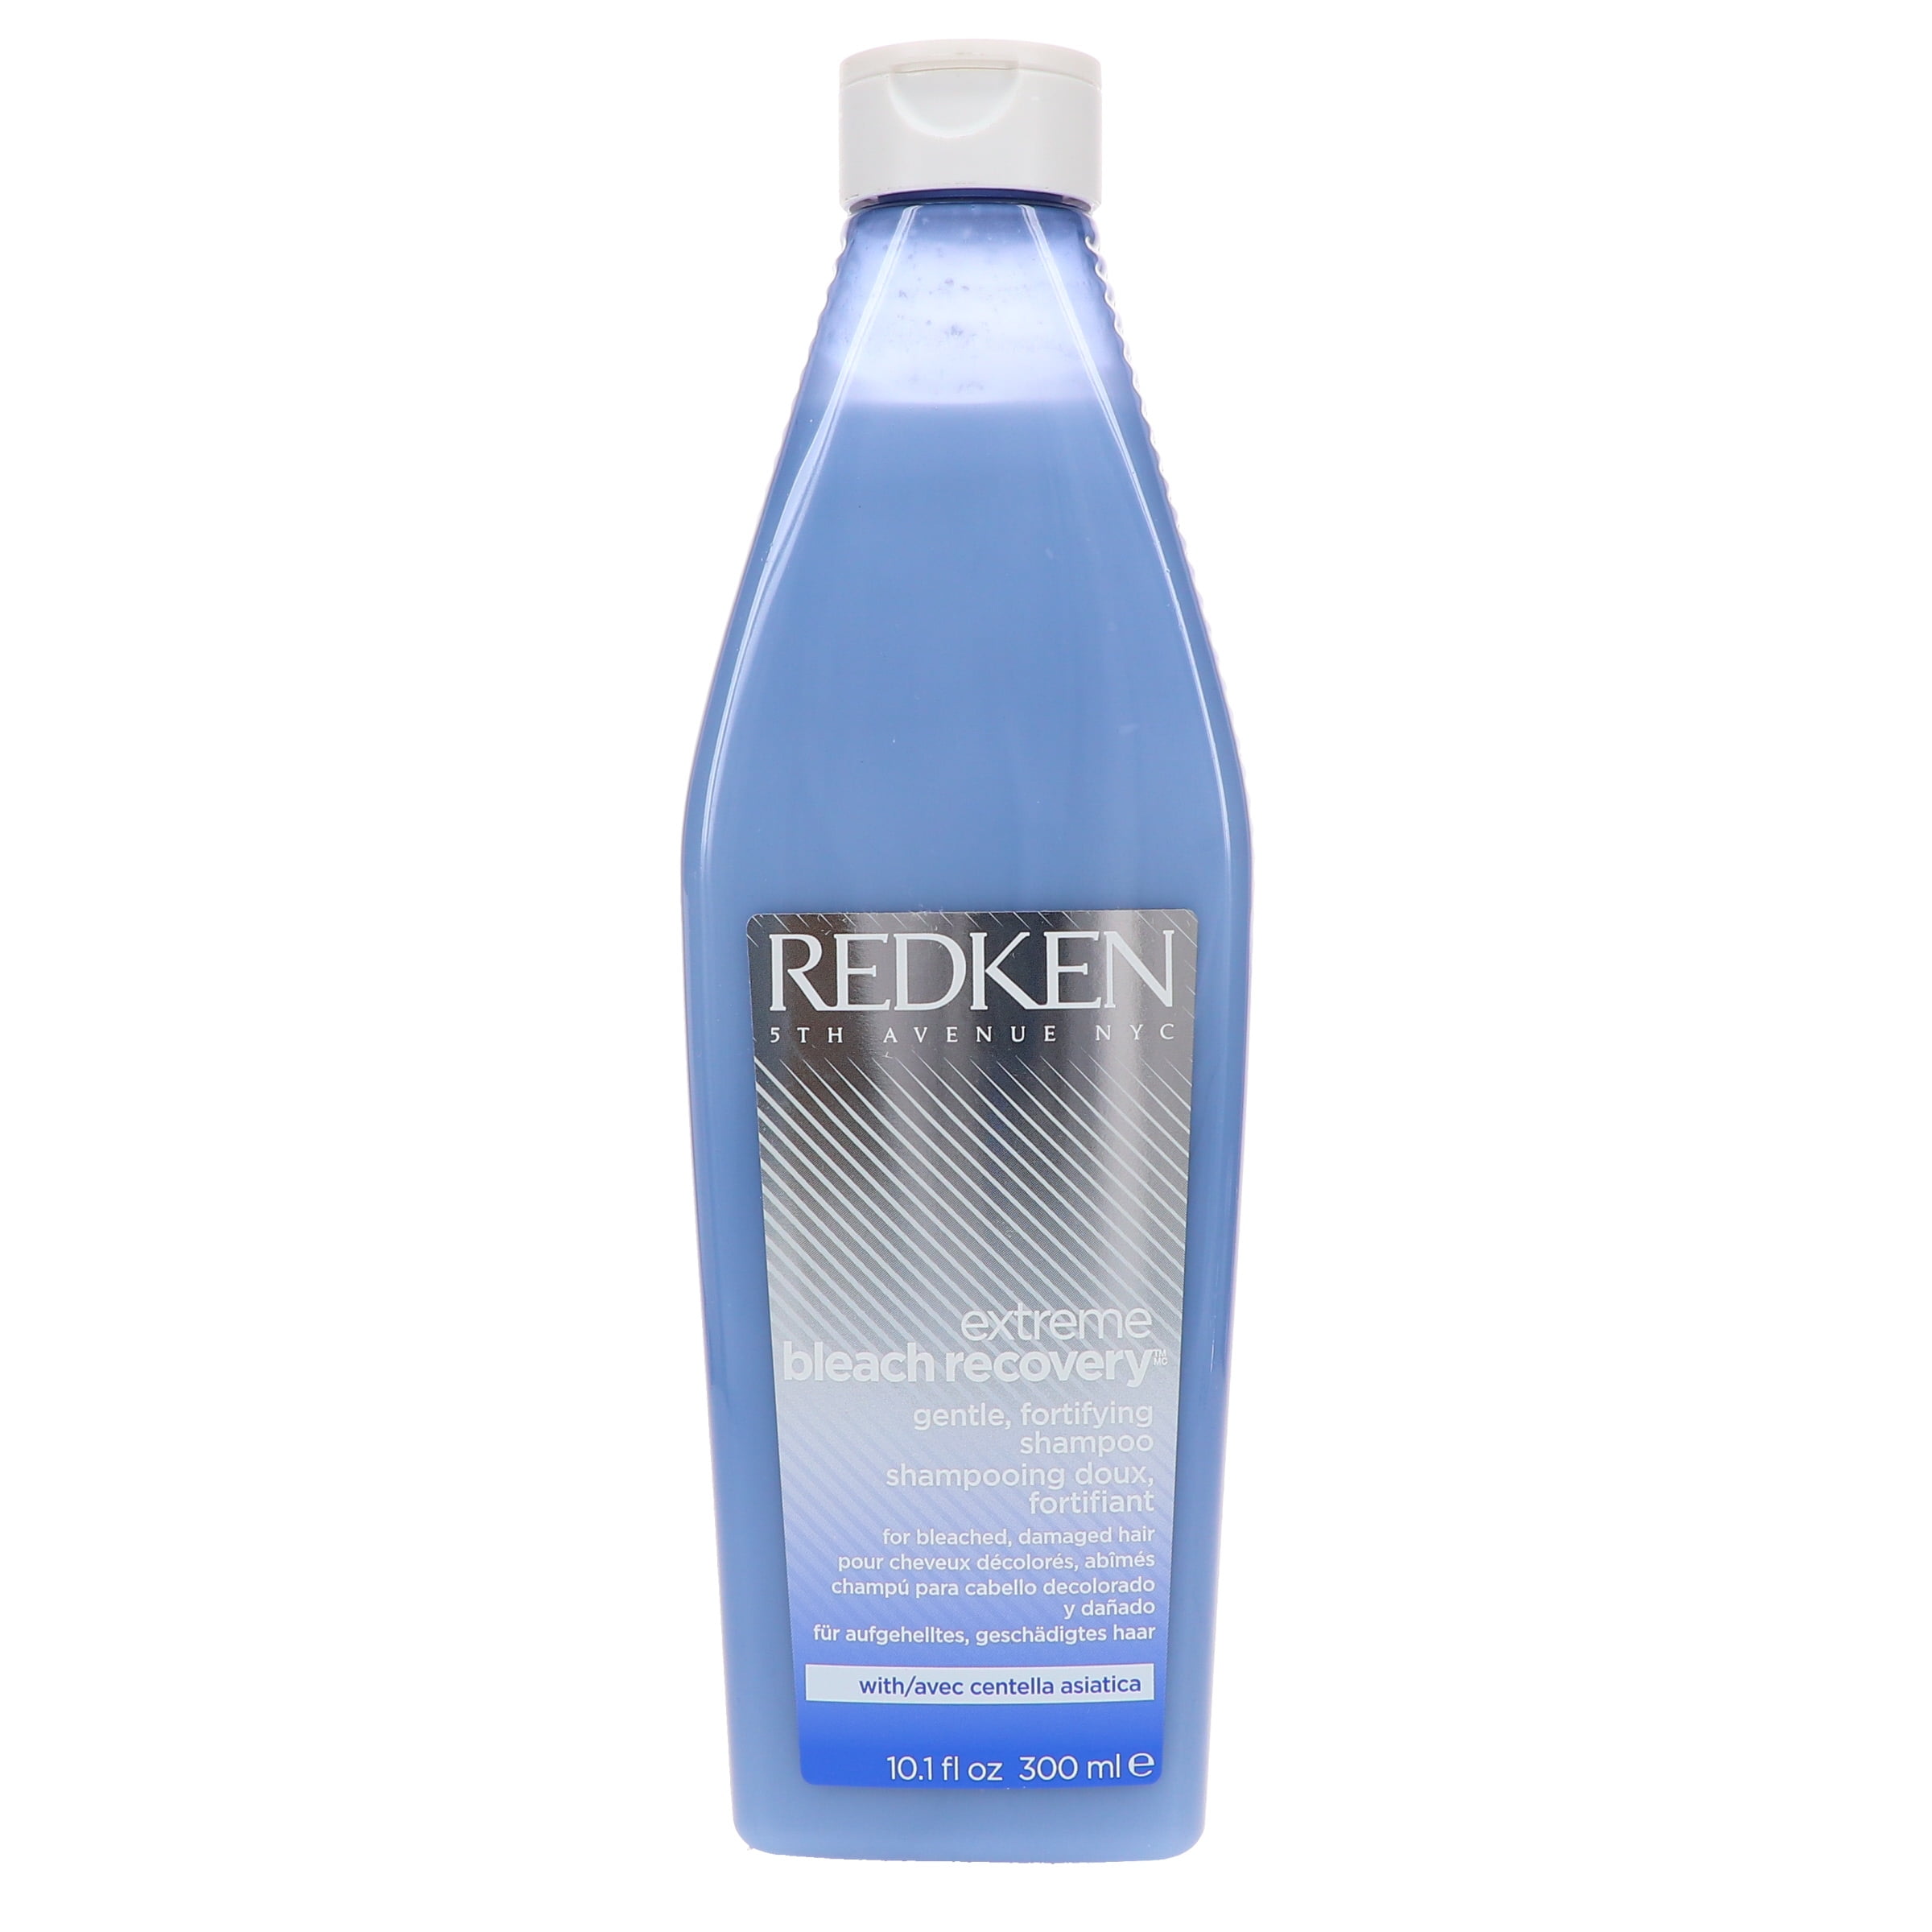 Redken Extreme Bleach Recovery Shampoo 10.1 oz